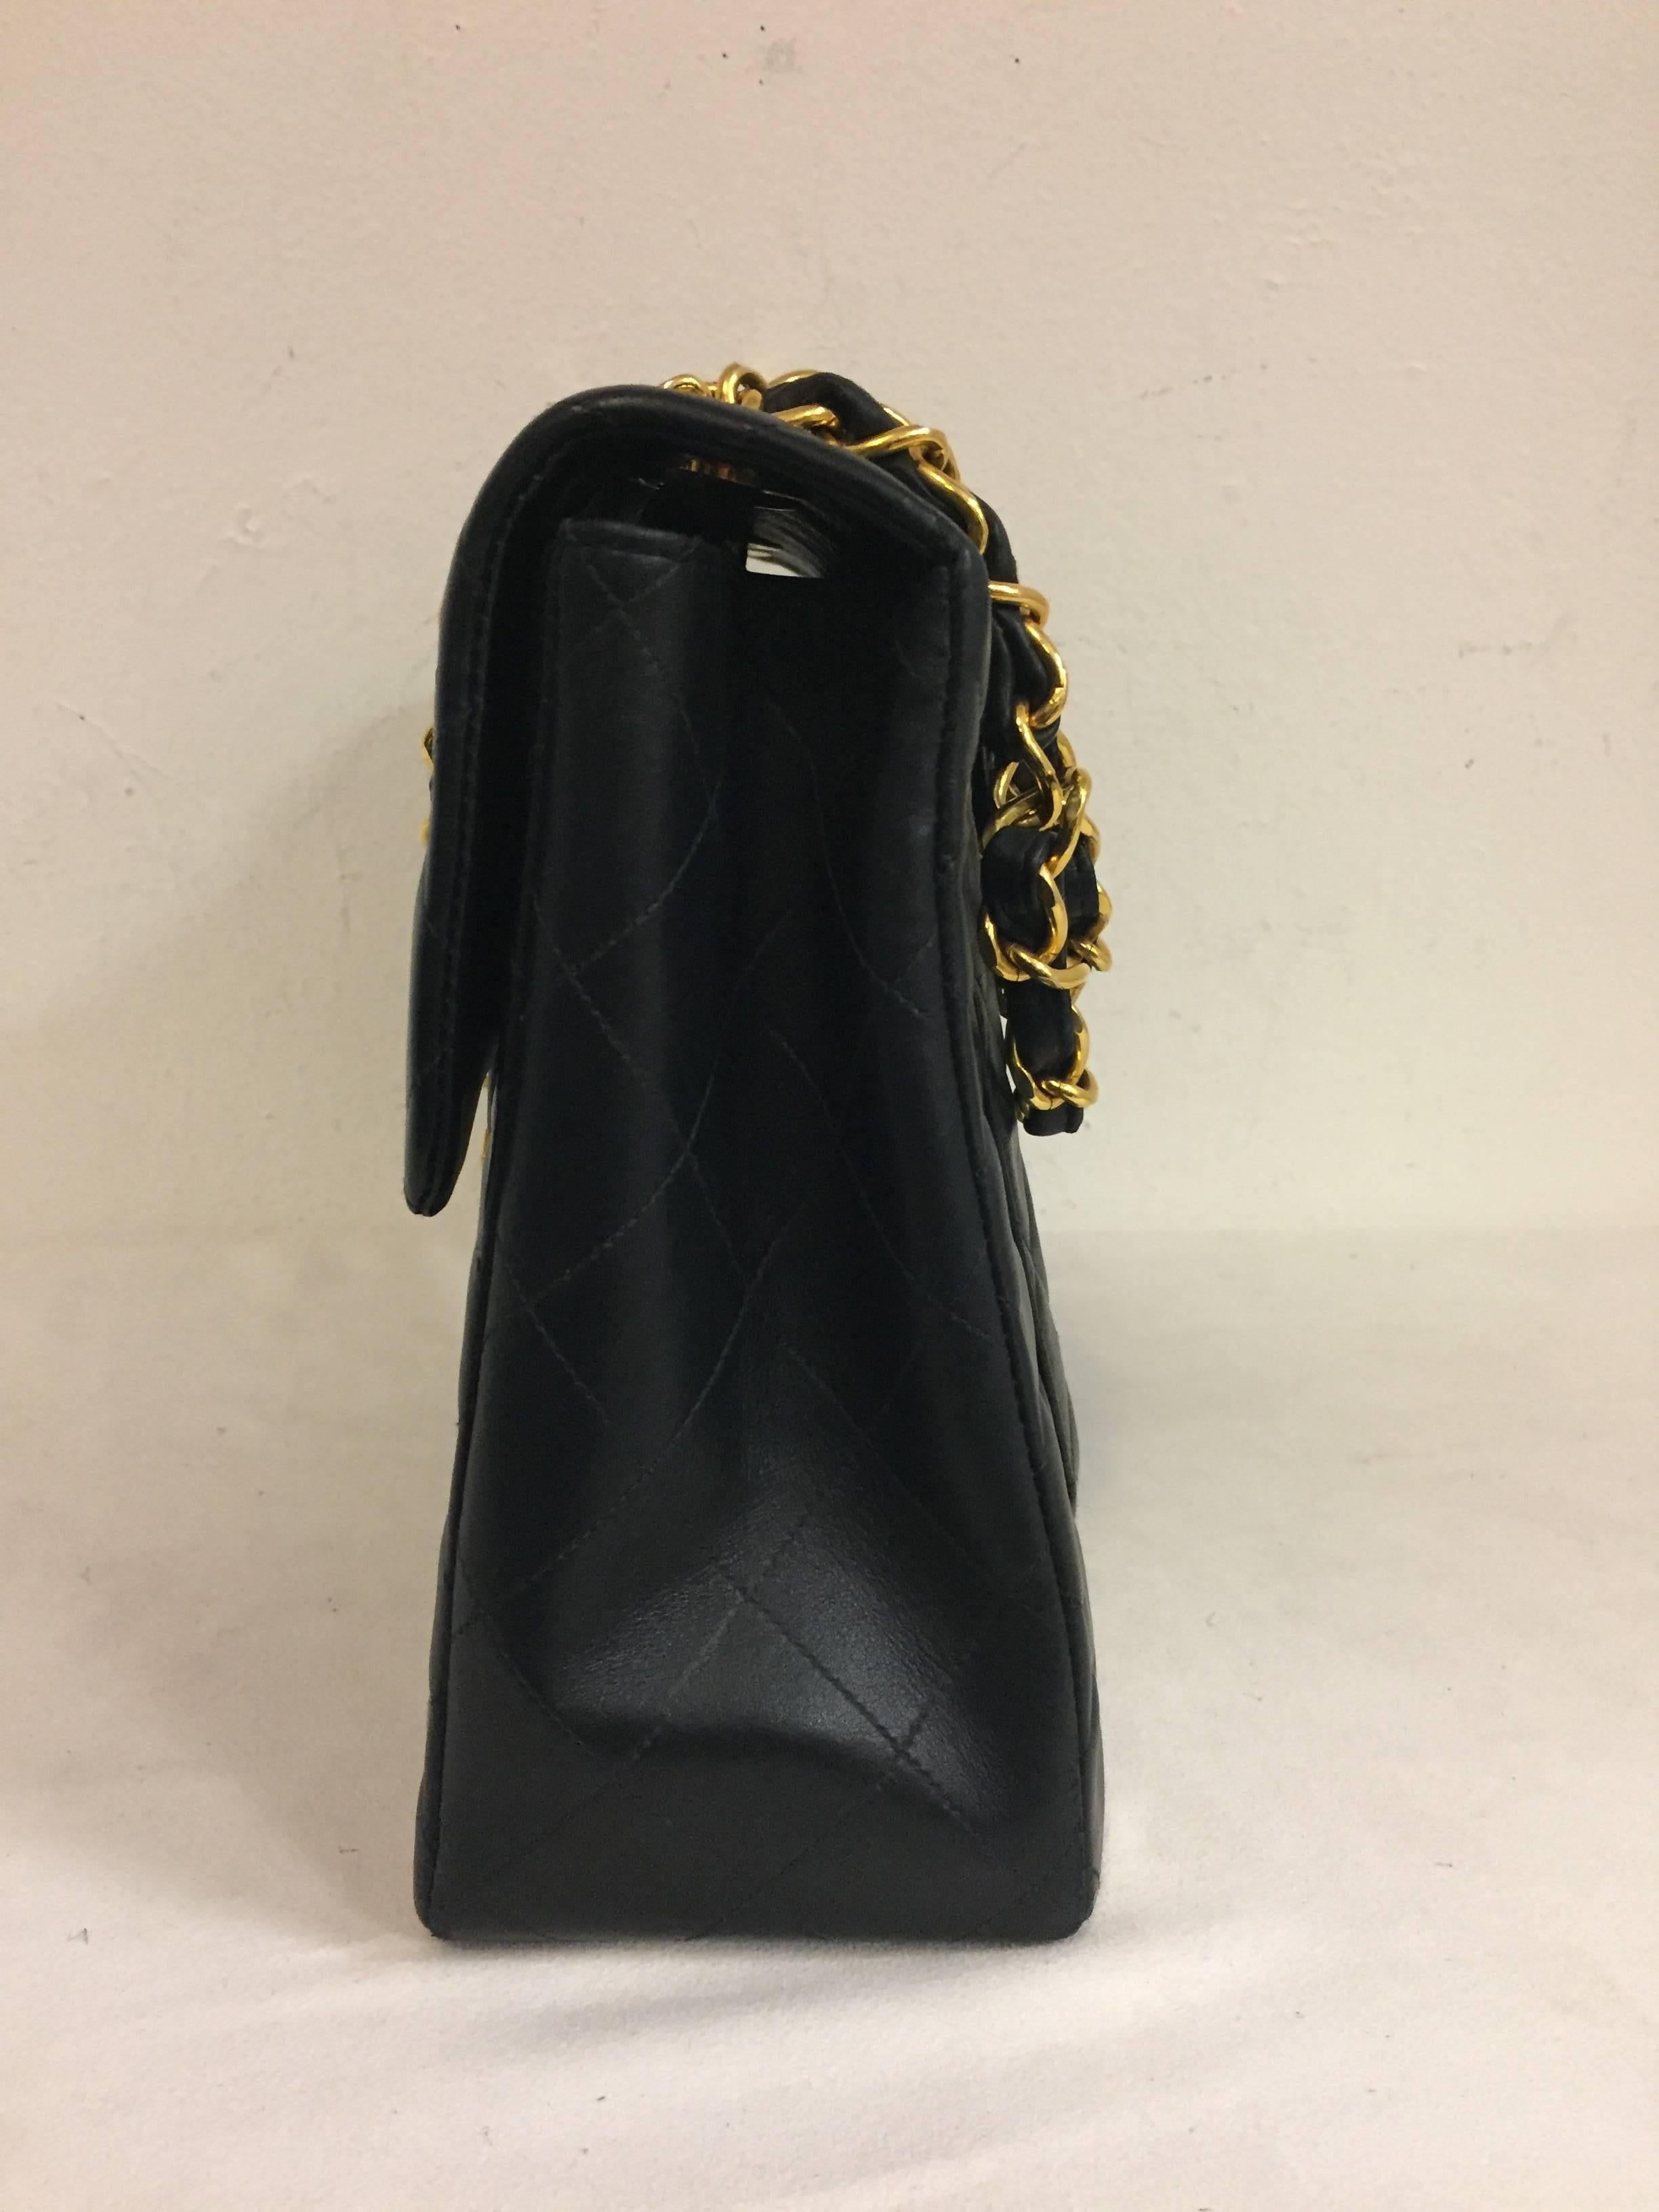 Women's Classic Chanel Single Flap Handbag in Black Quilted Lambskin